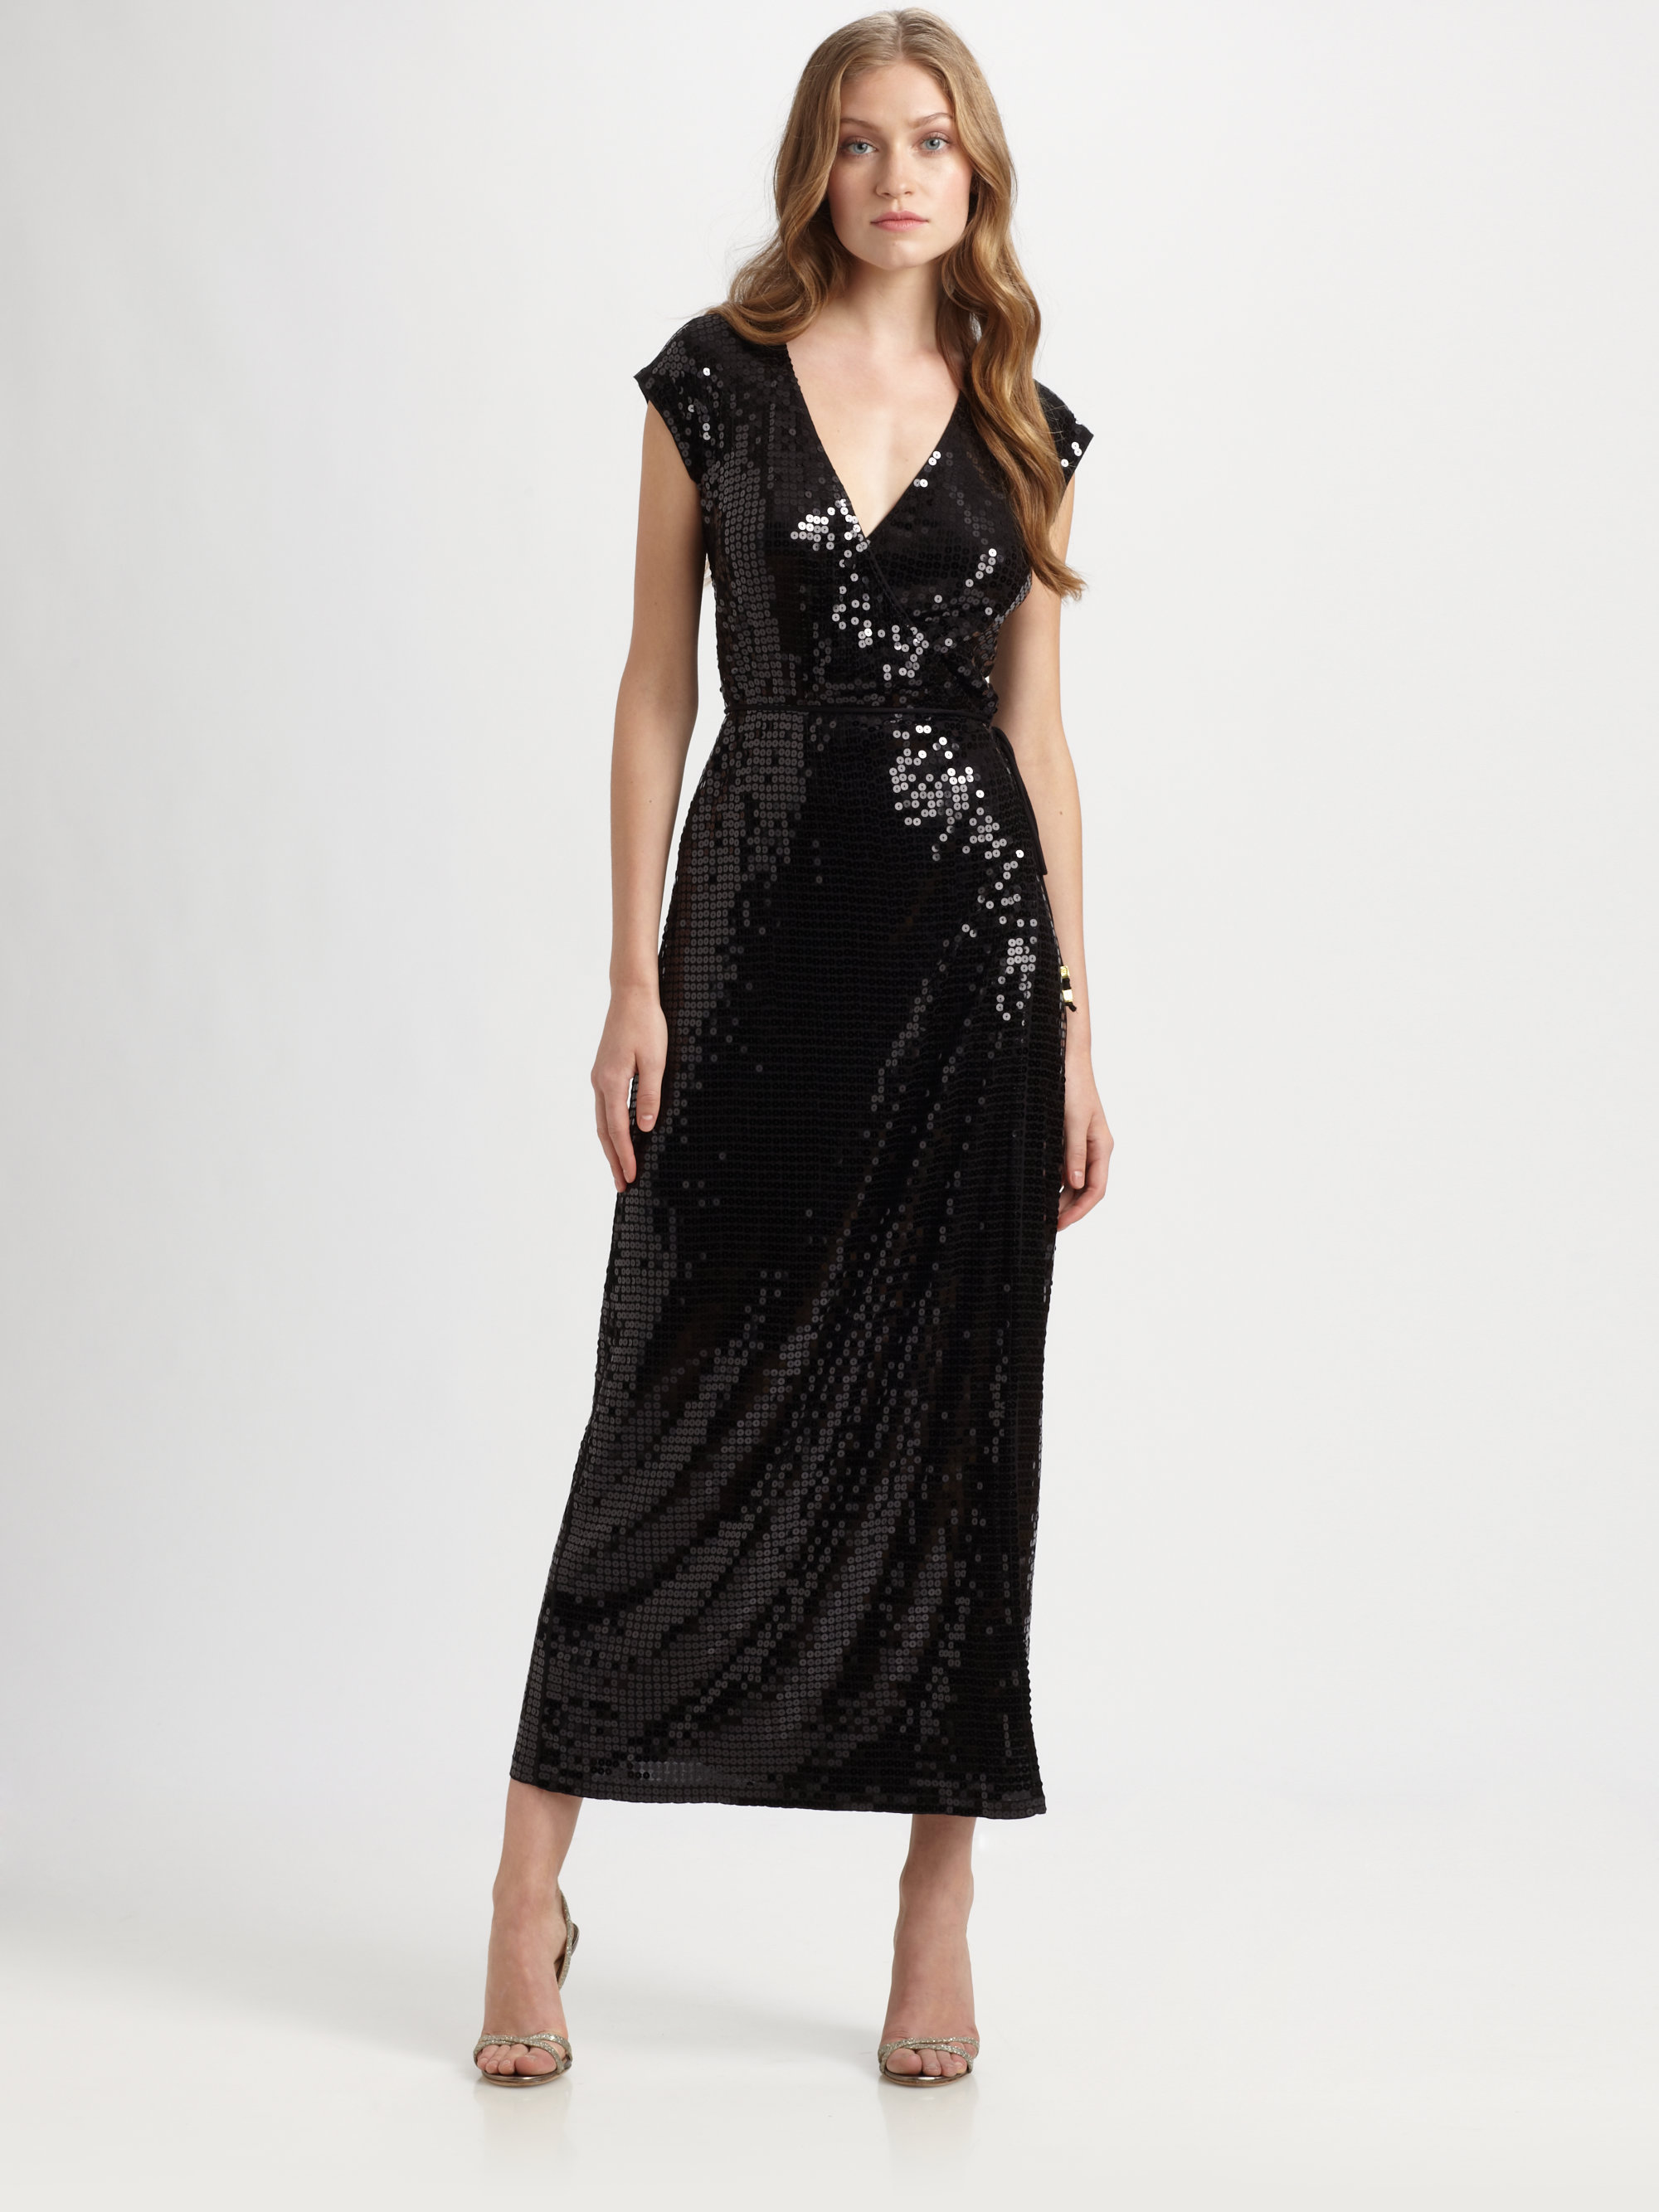 MICHAEL Michael Kors Sequin Wrap Dress in Black - Lyst